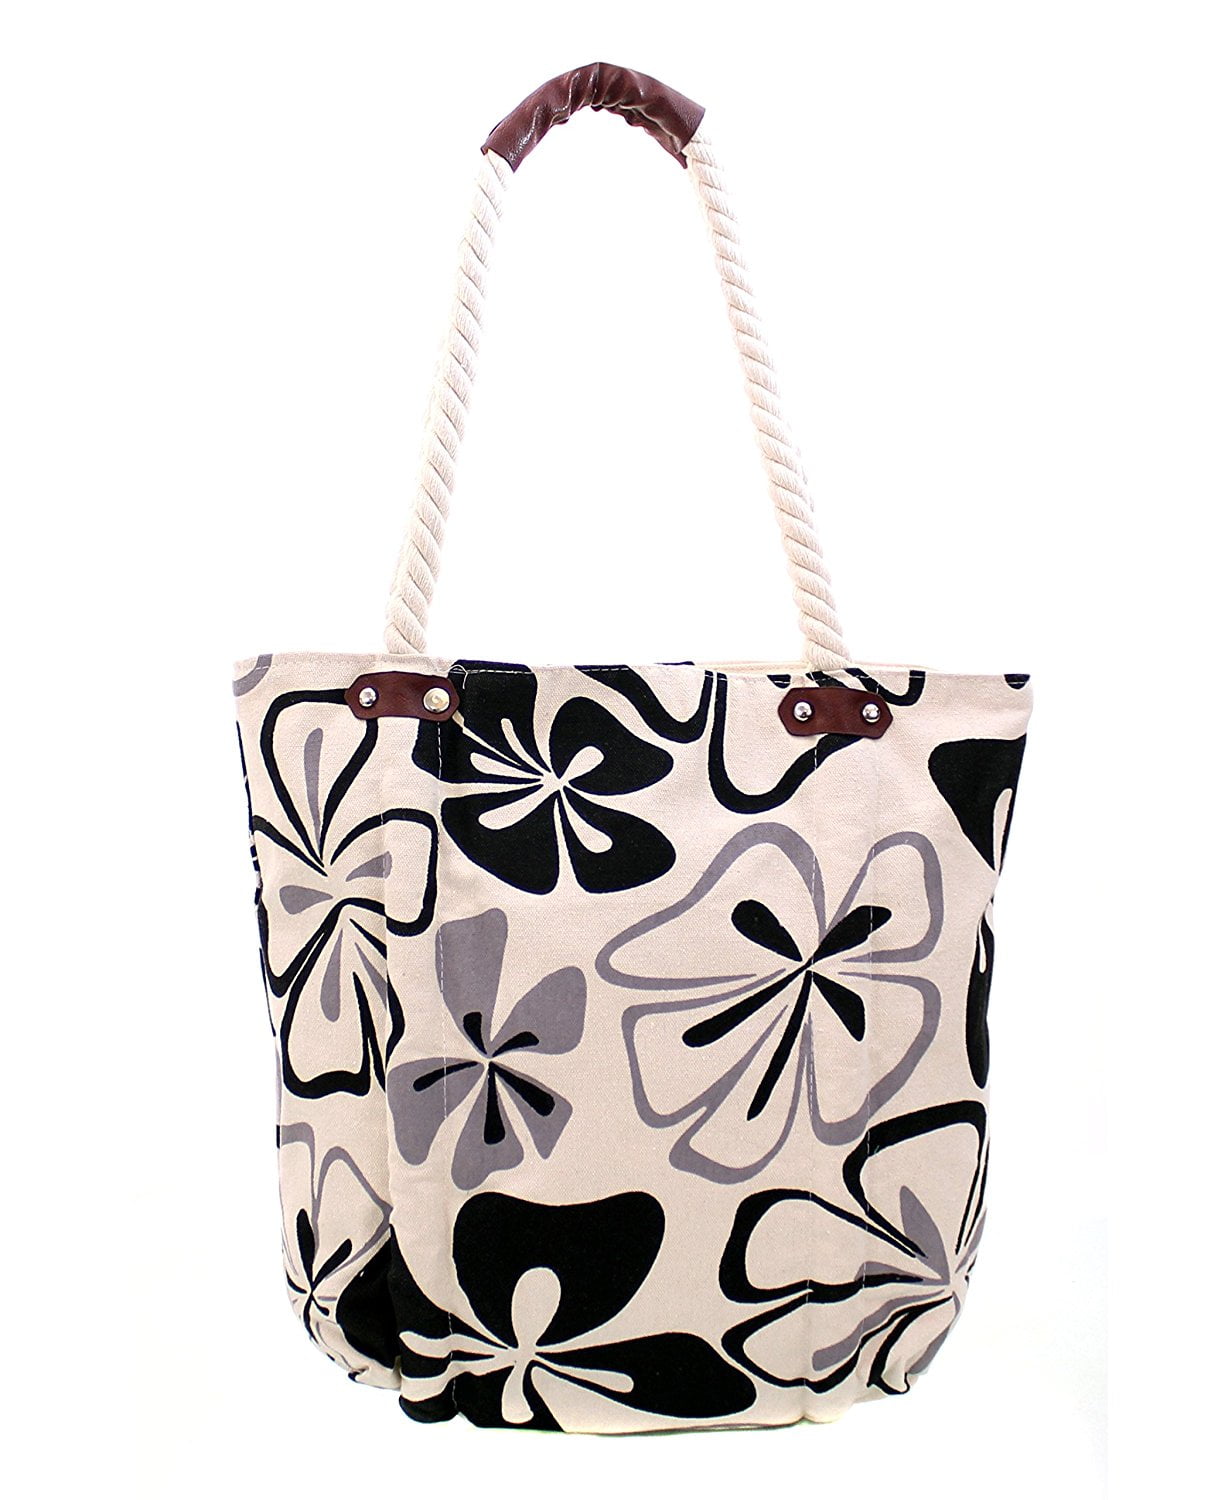 Tote Bags Embroidery Exotic Flowers Anchor Pattern Hummingbird Travel Totes Bag Fashion Handbags Shopping Zippered Tote For Women Waterproof Handba 